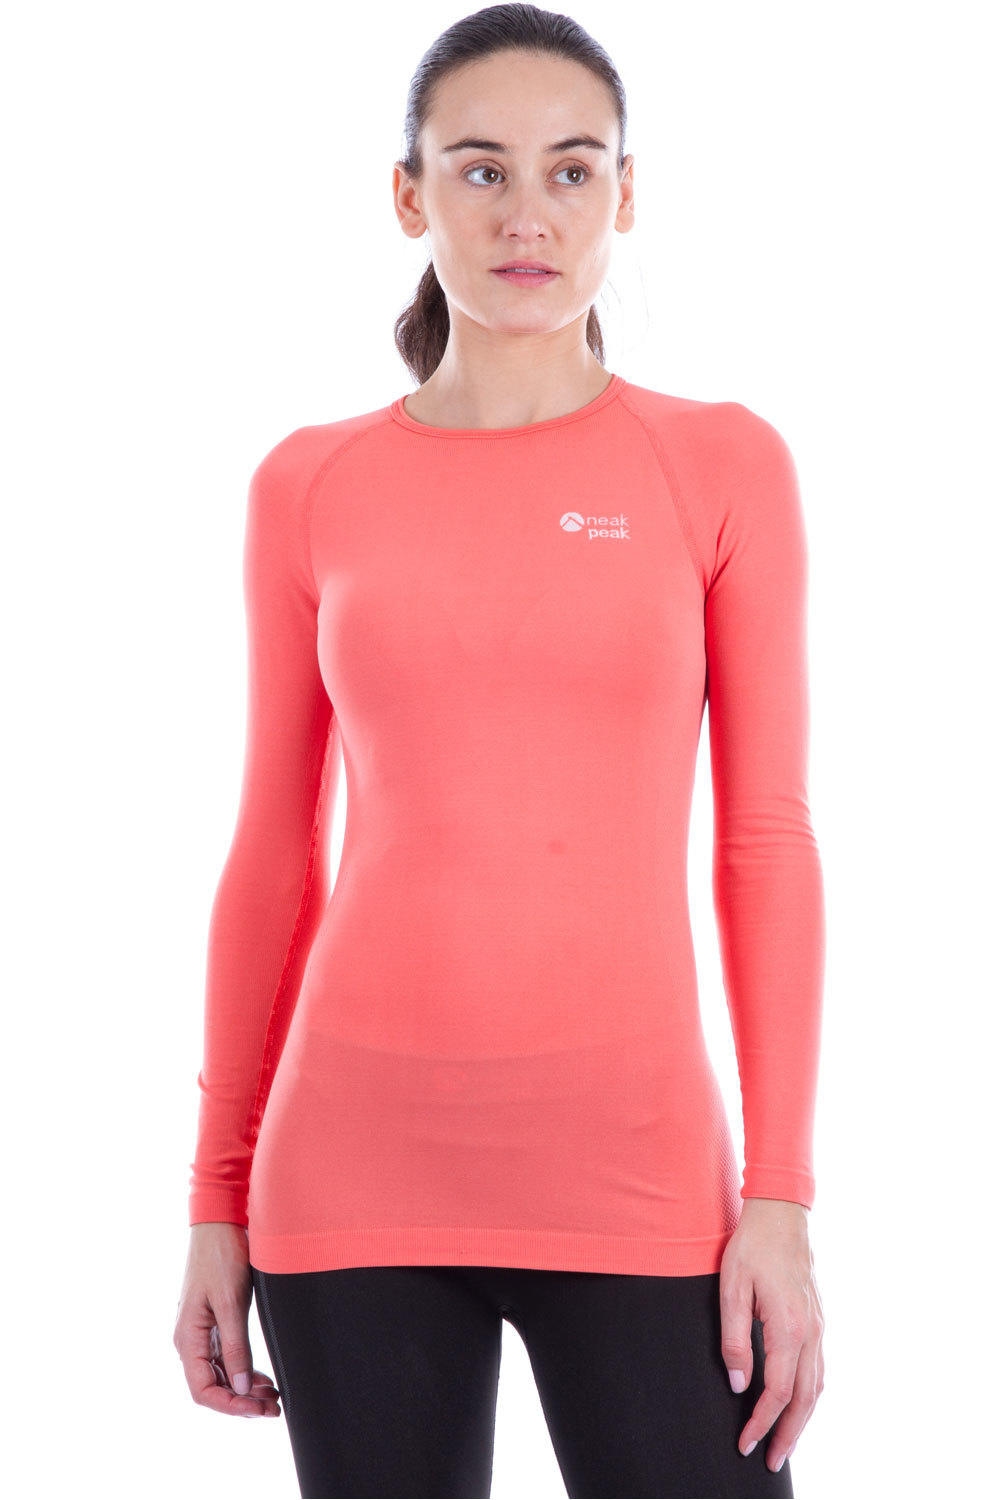 Neak Peak M/L MUJER | | Camiseta Térmica Larga Mujer | Sport